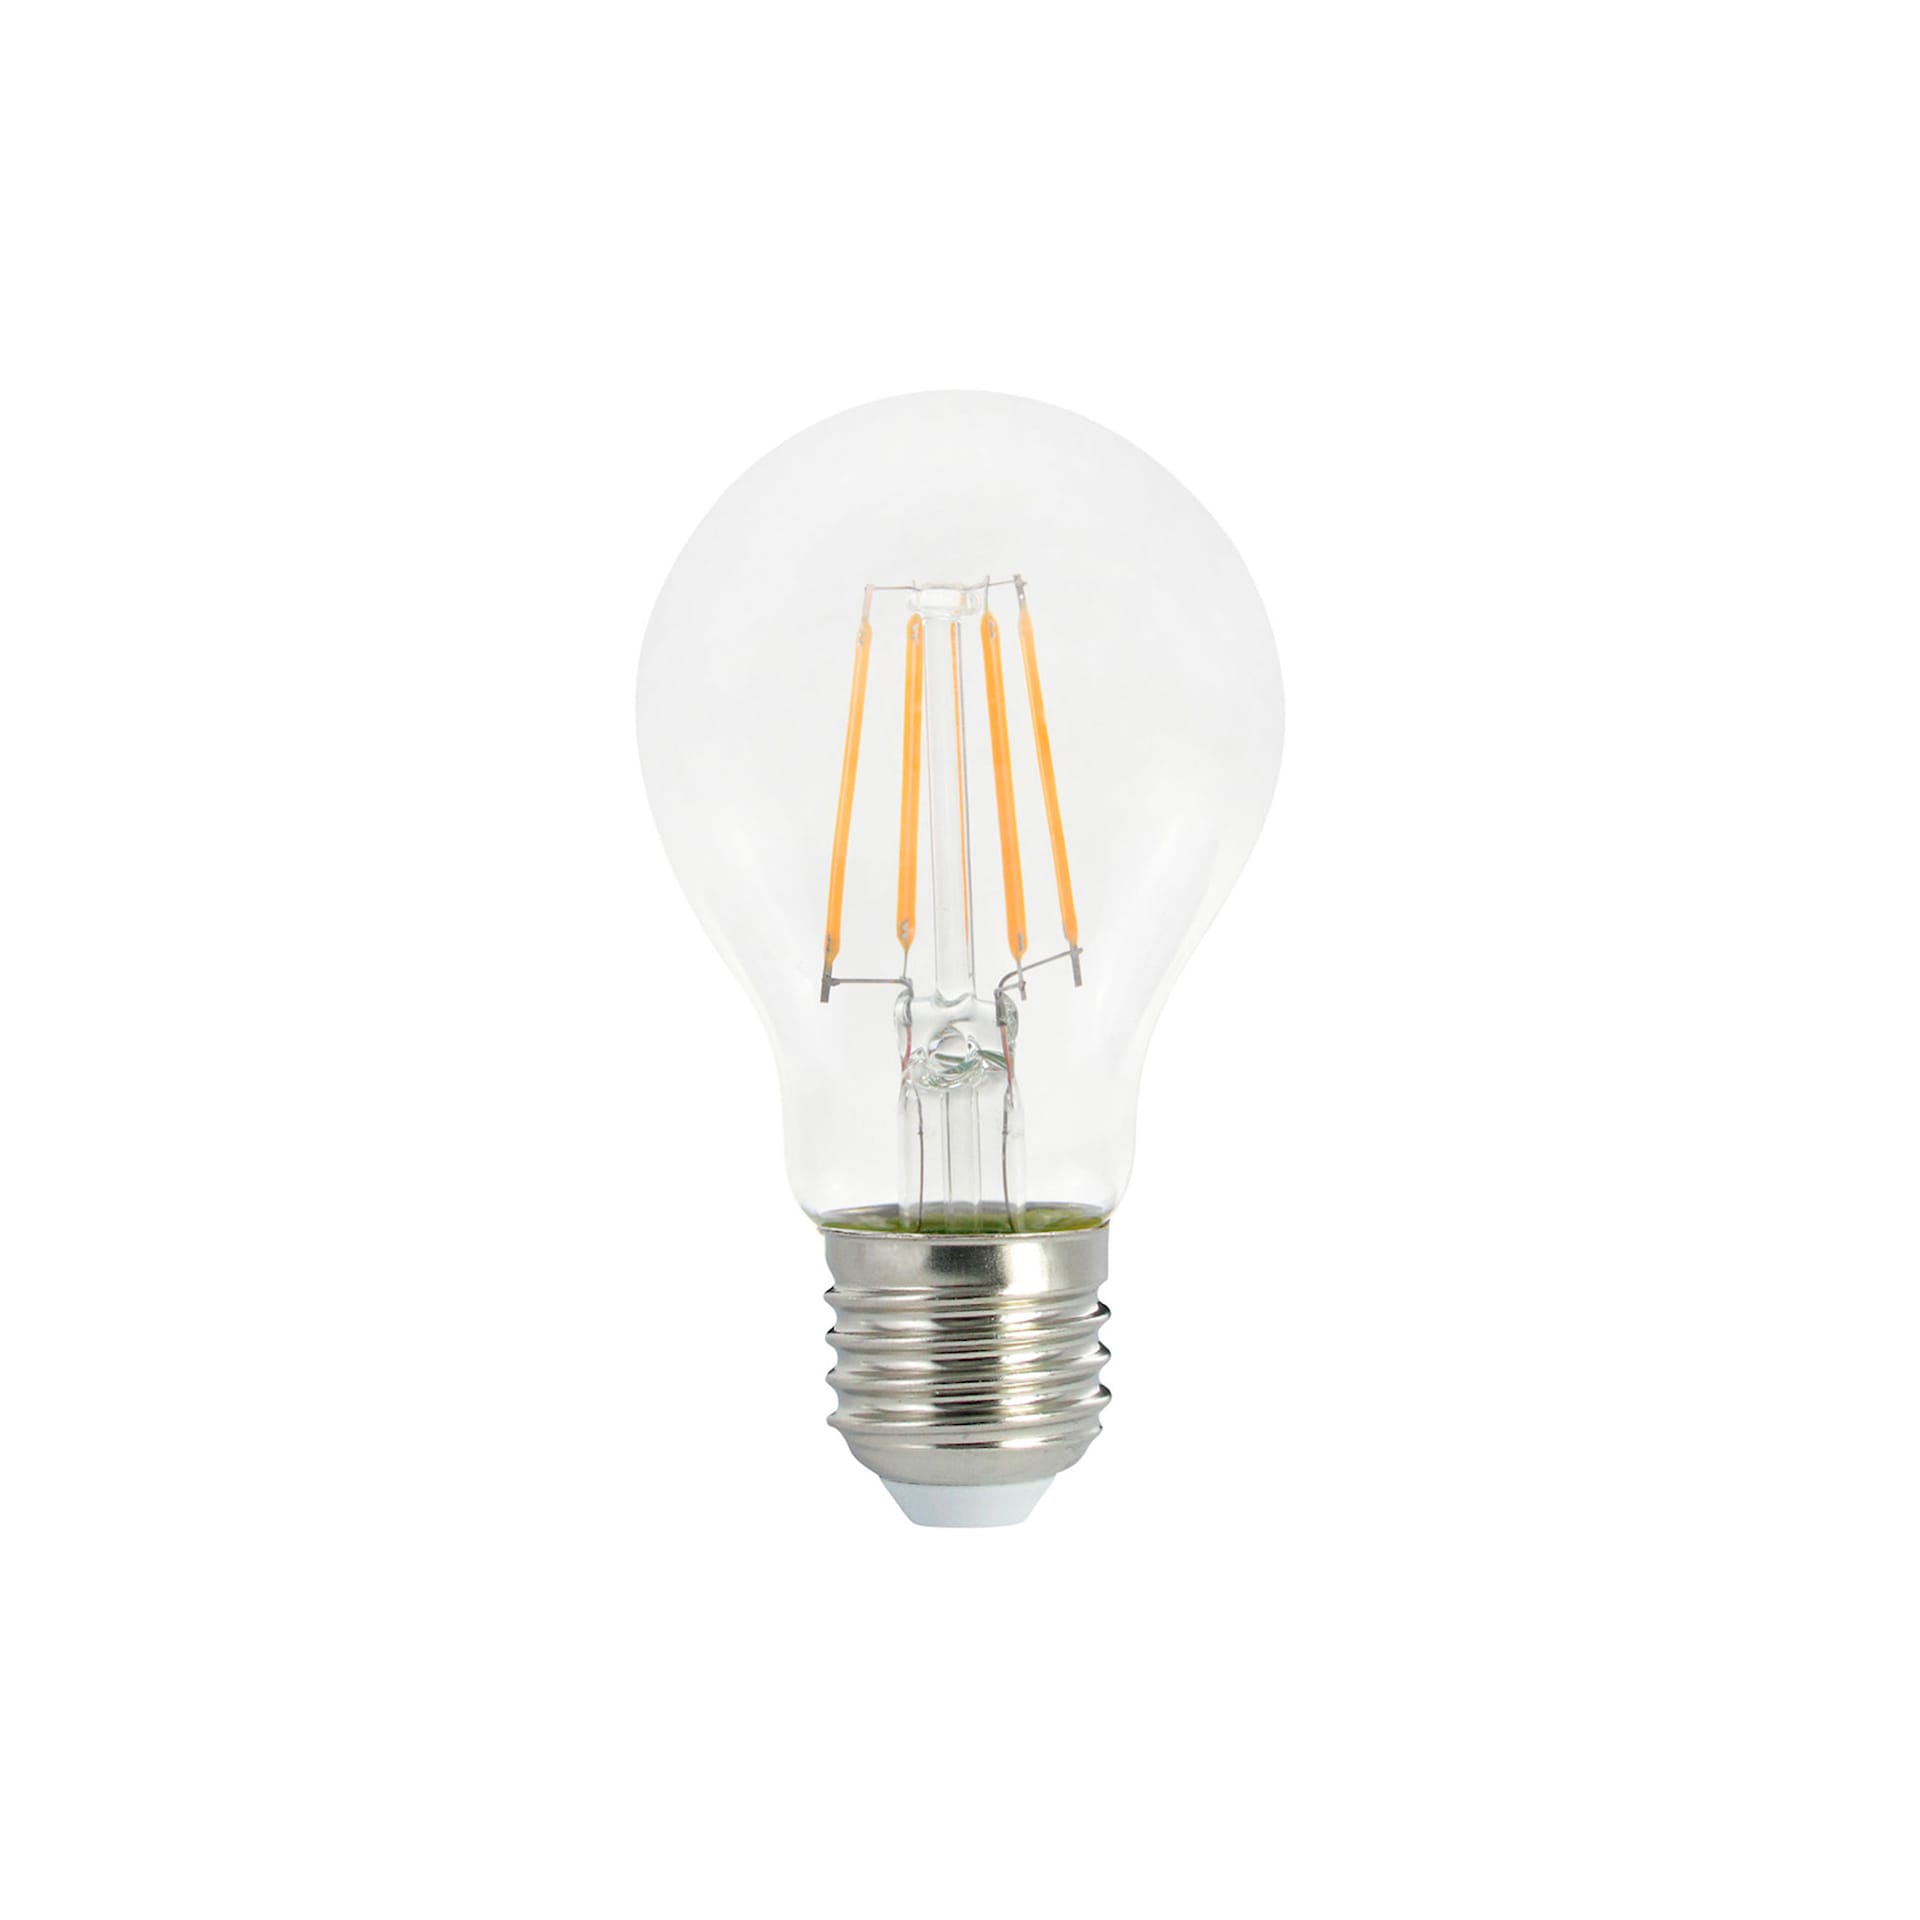 Filament LED globe lamp E27 - Airam - NO GA